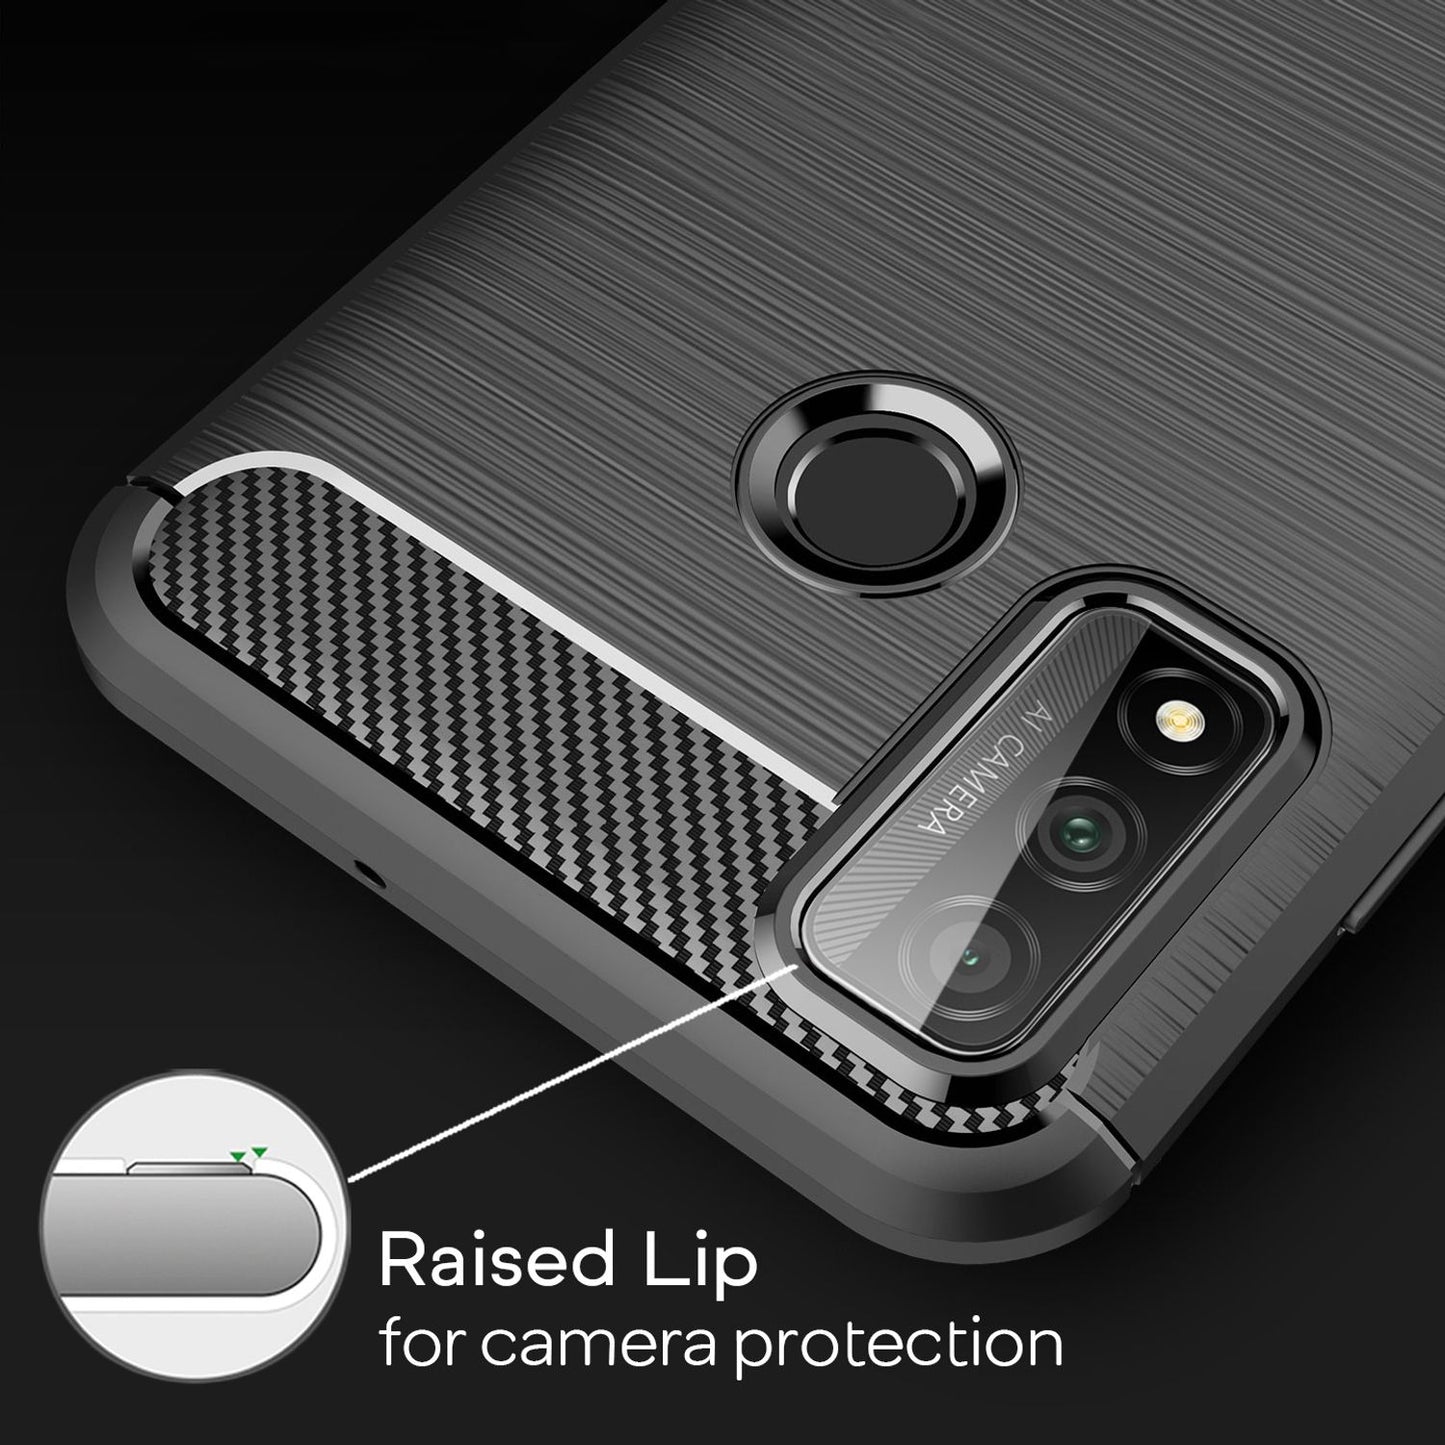 NALIA Handy Hülle für Huawei P smart 2020, Carbon Look Case Cover Silikon Bumper